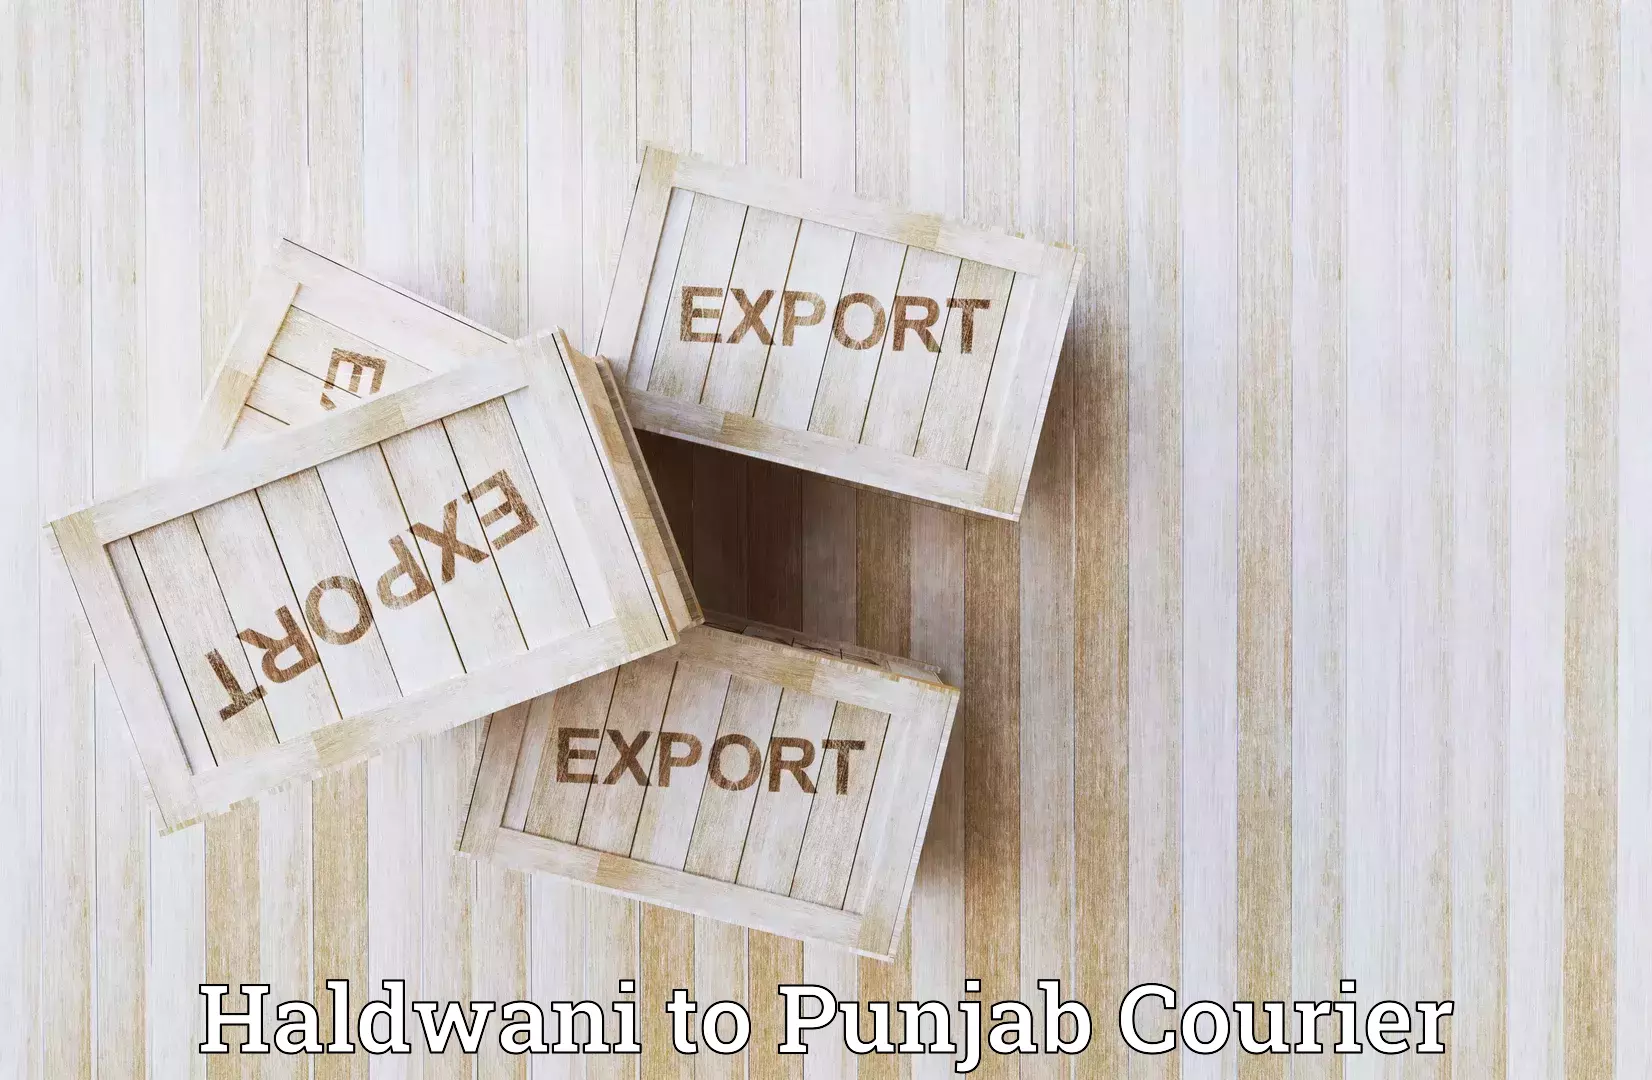 Nationwide delivery network Haldwani to Punjab